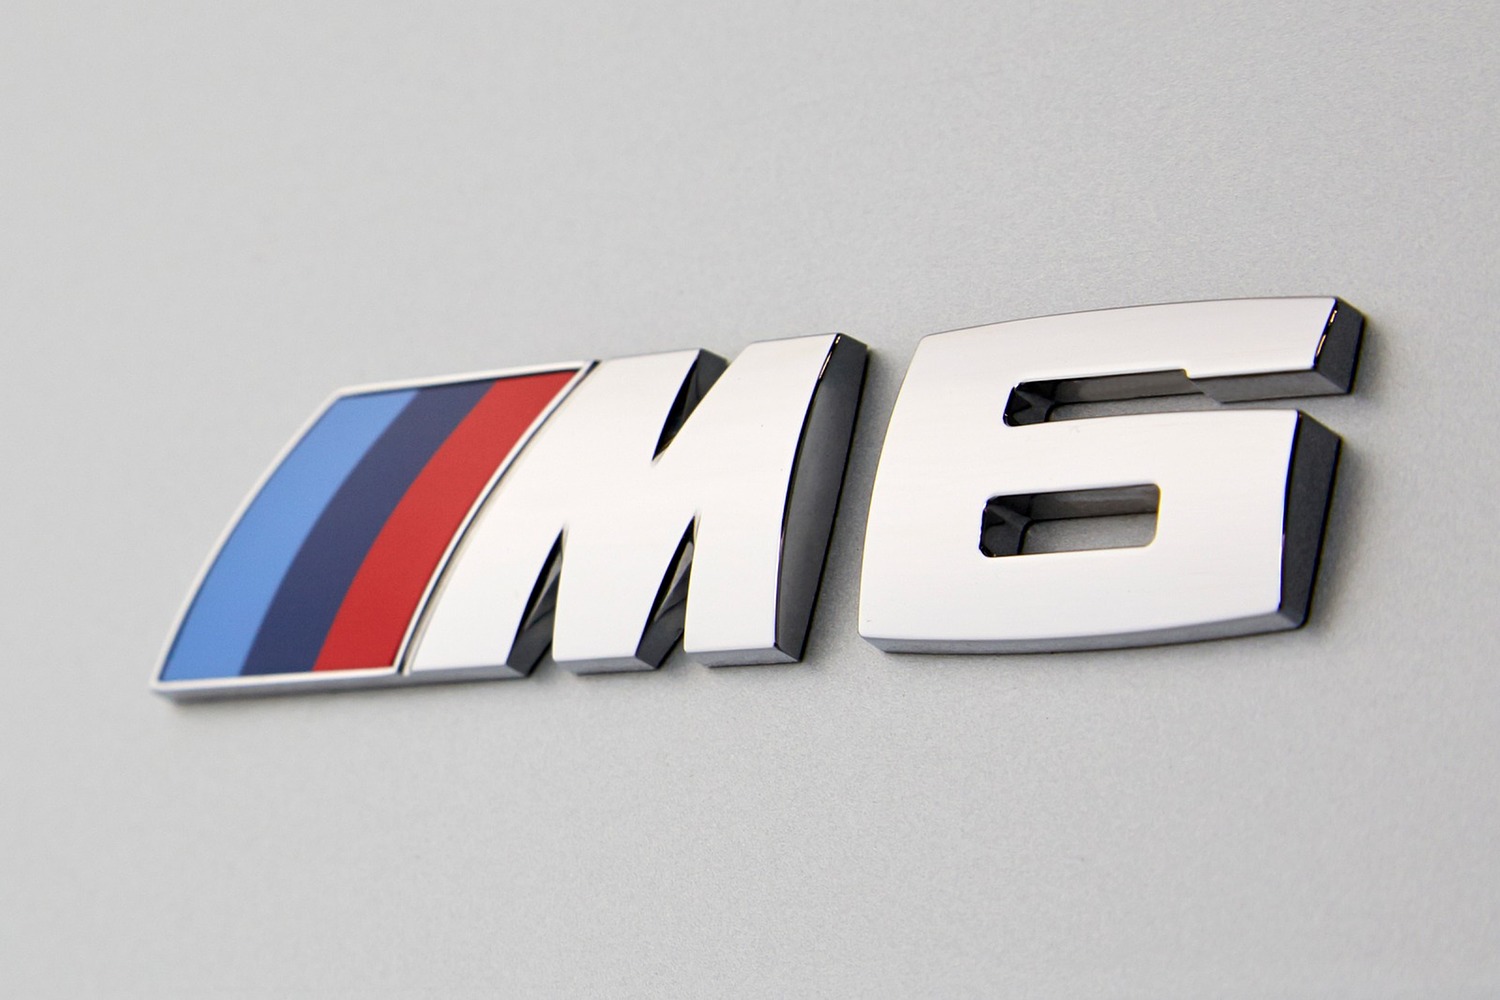 BMW M6 Gran Coupe Sedan Rear Badge (2017 model year shown)